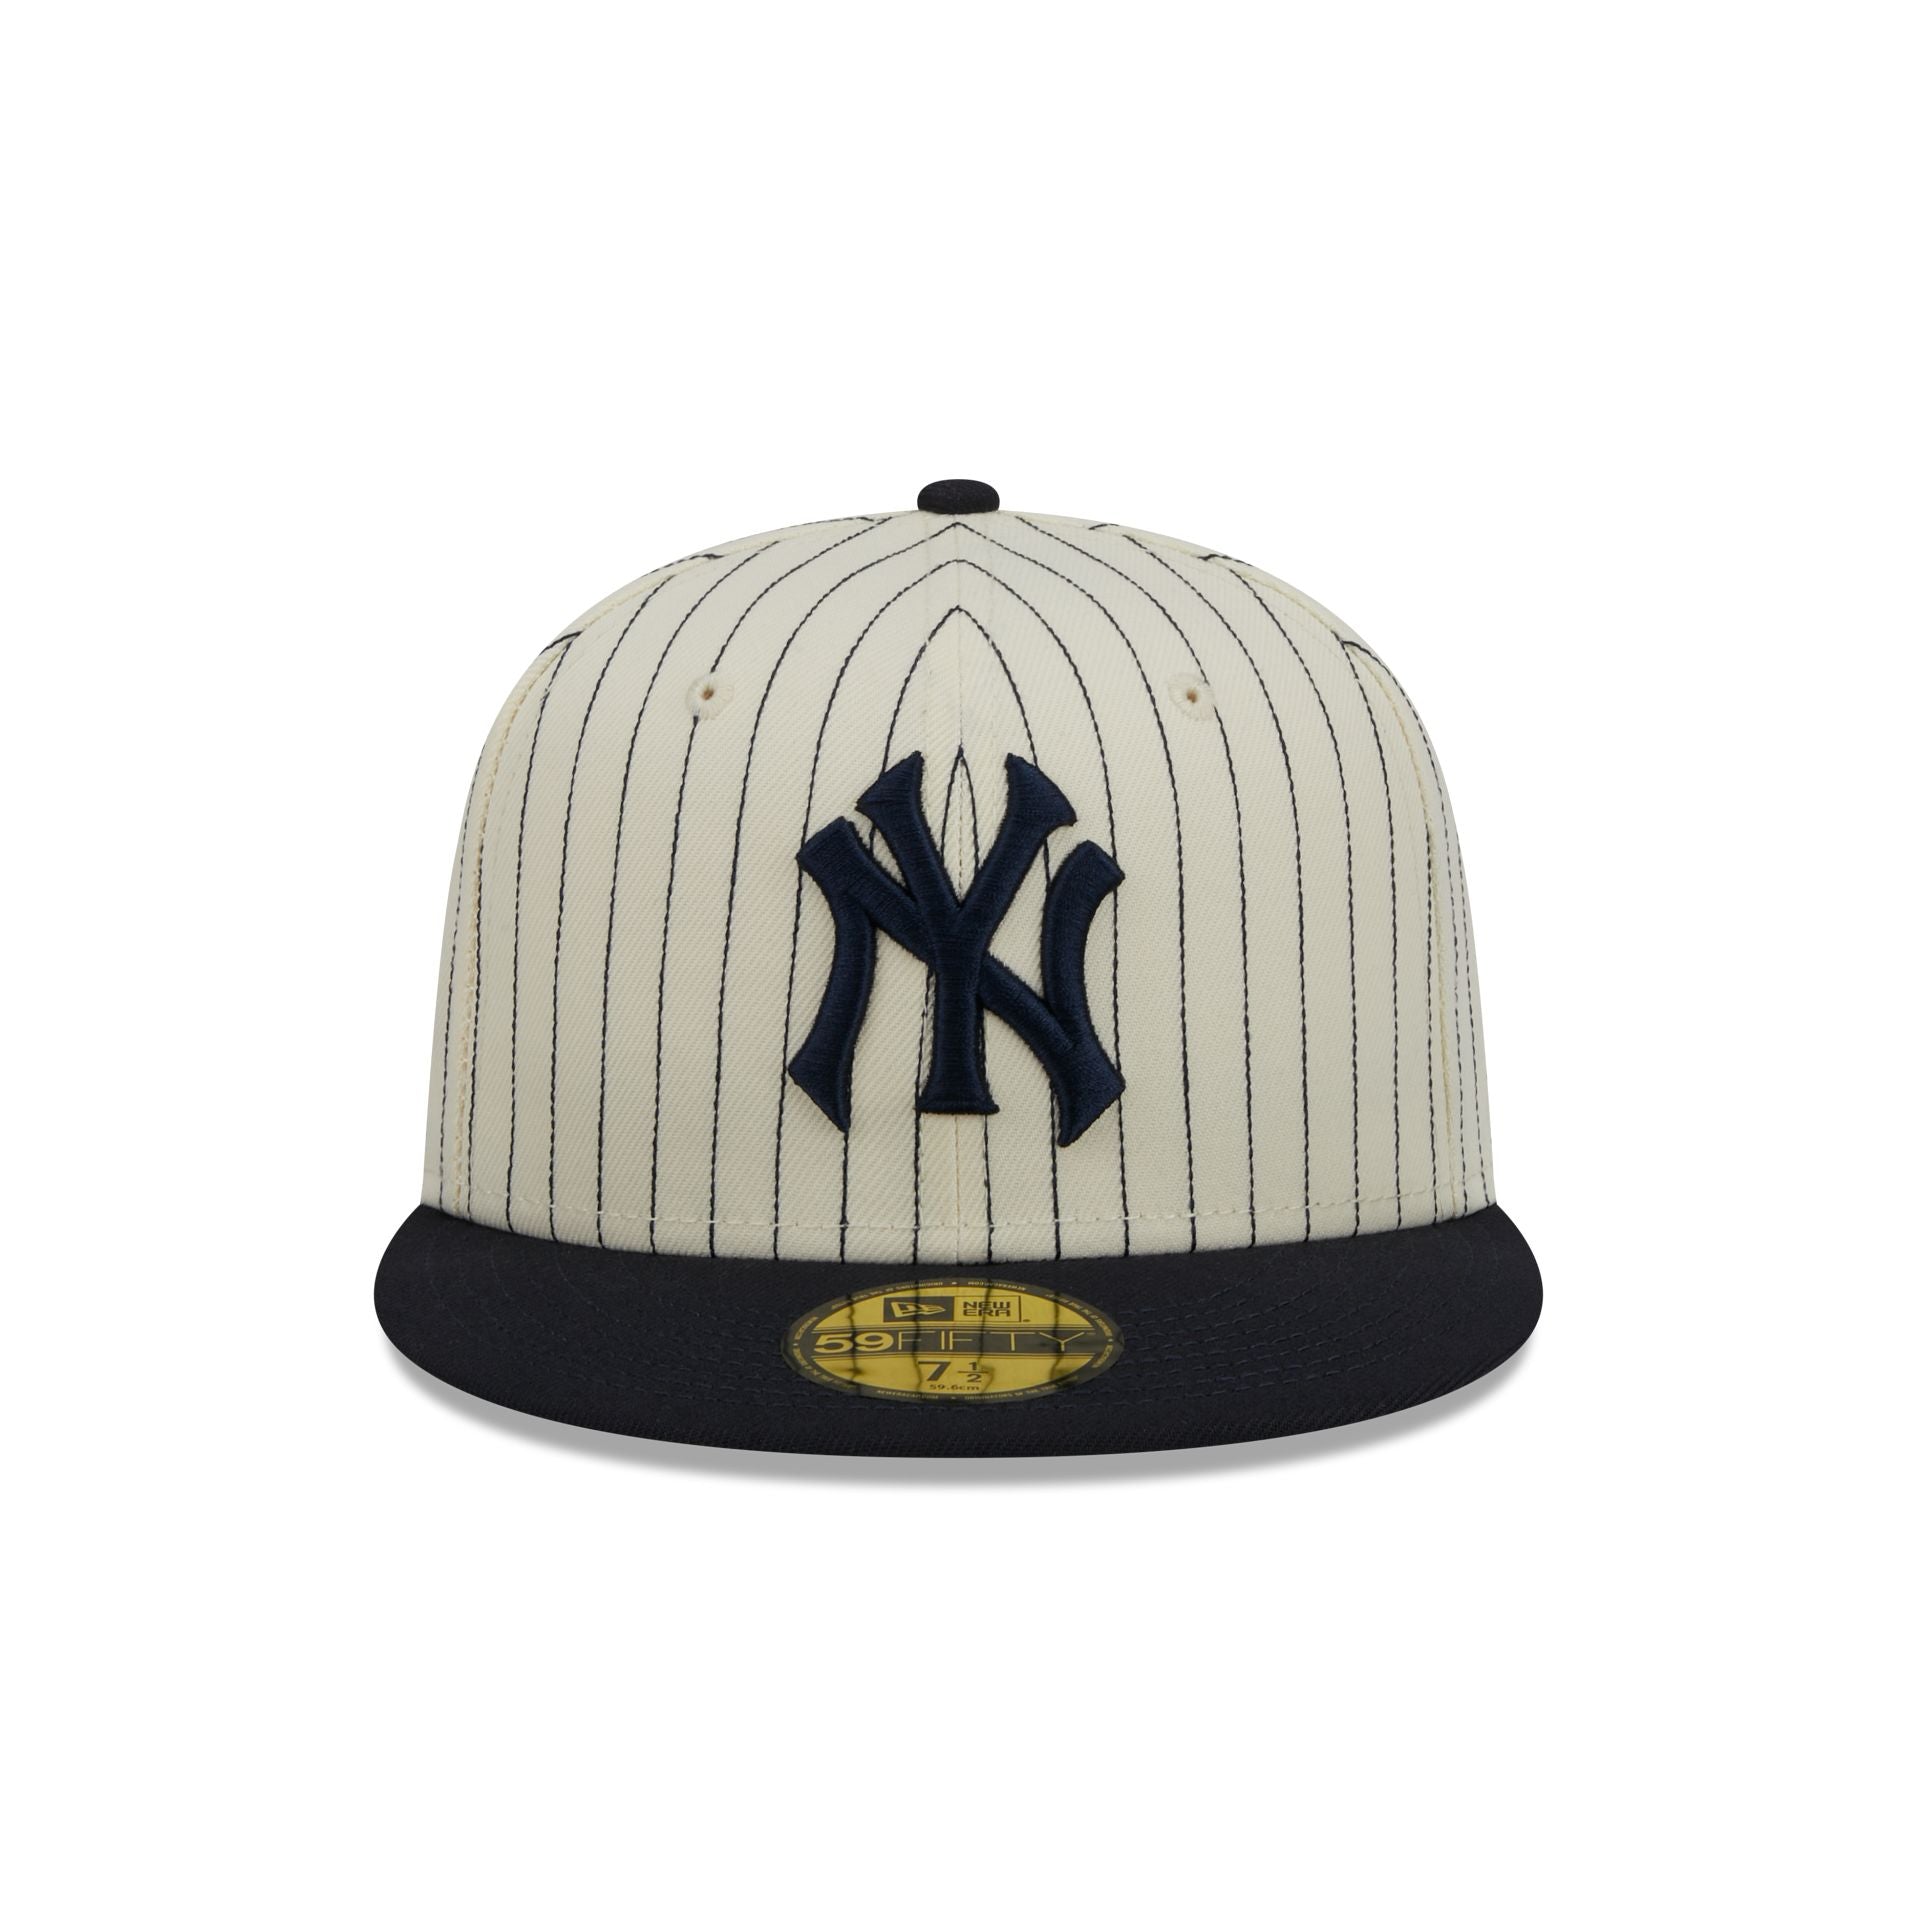 & Cap Yankees New – York New Era Hats Caps